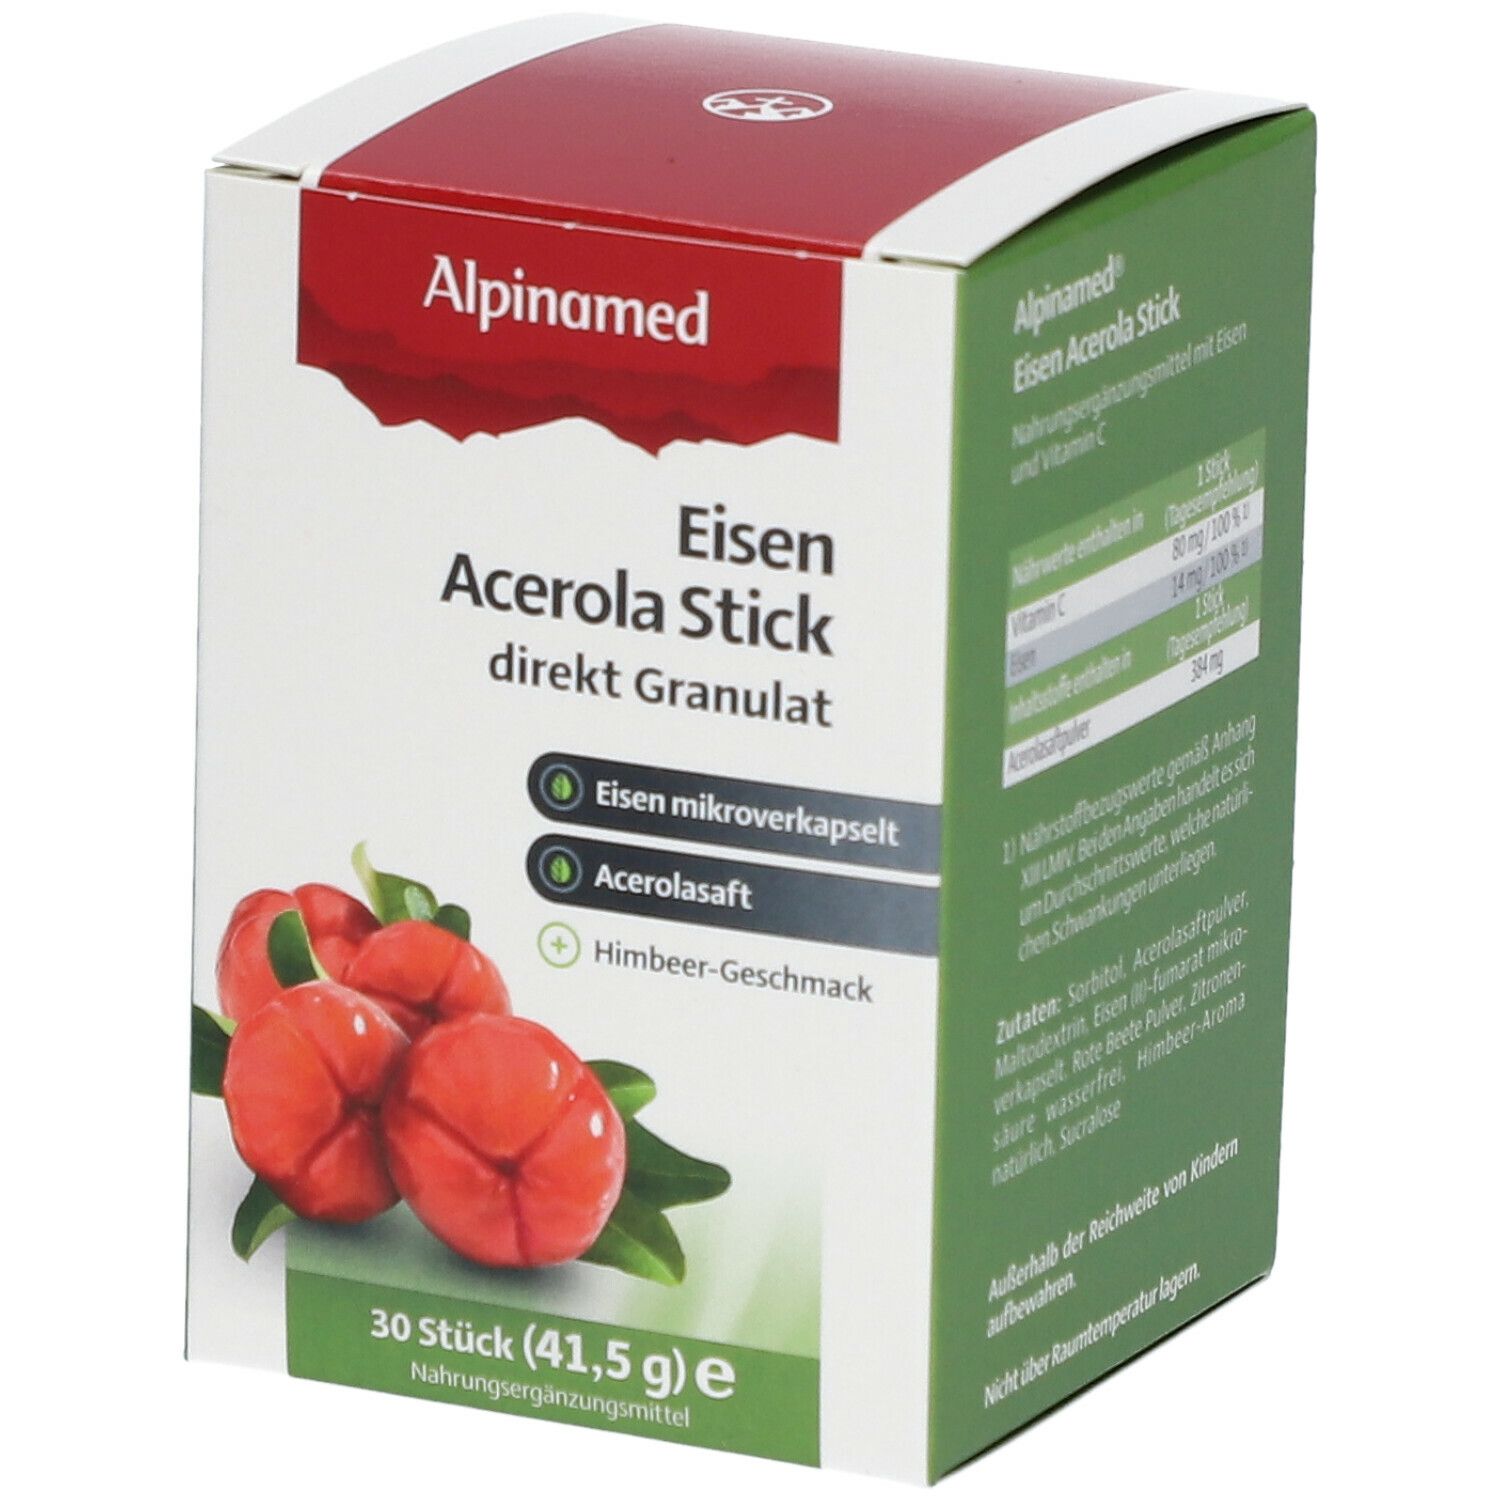 Alpinamed® Eisen Acerola